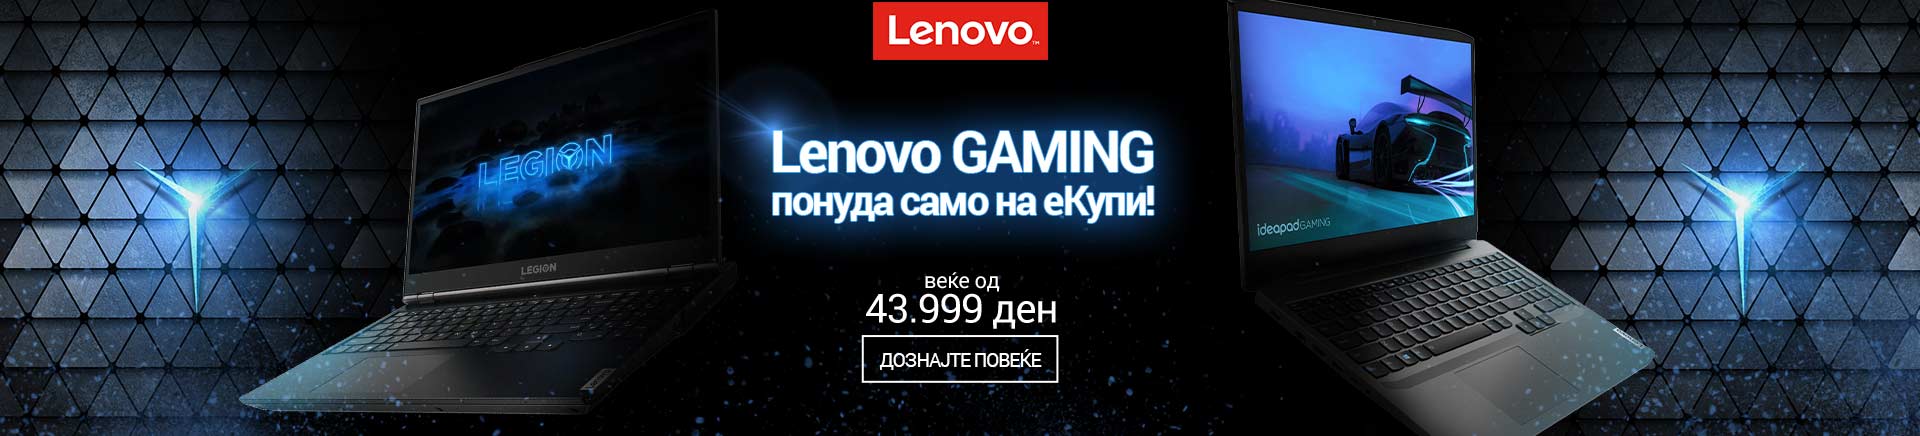 MK_Lenovo-gaming MOBILE 380 X 436.jpg